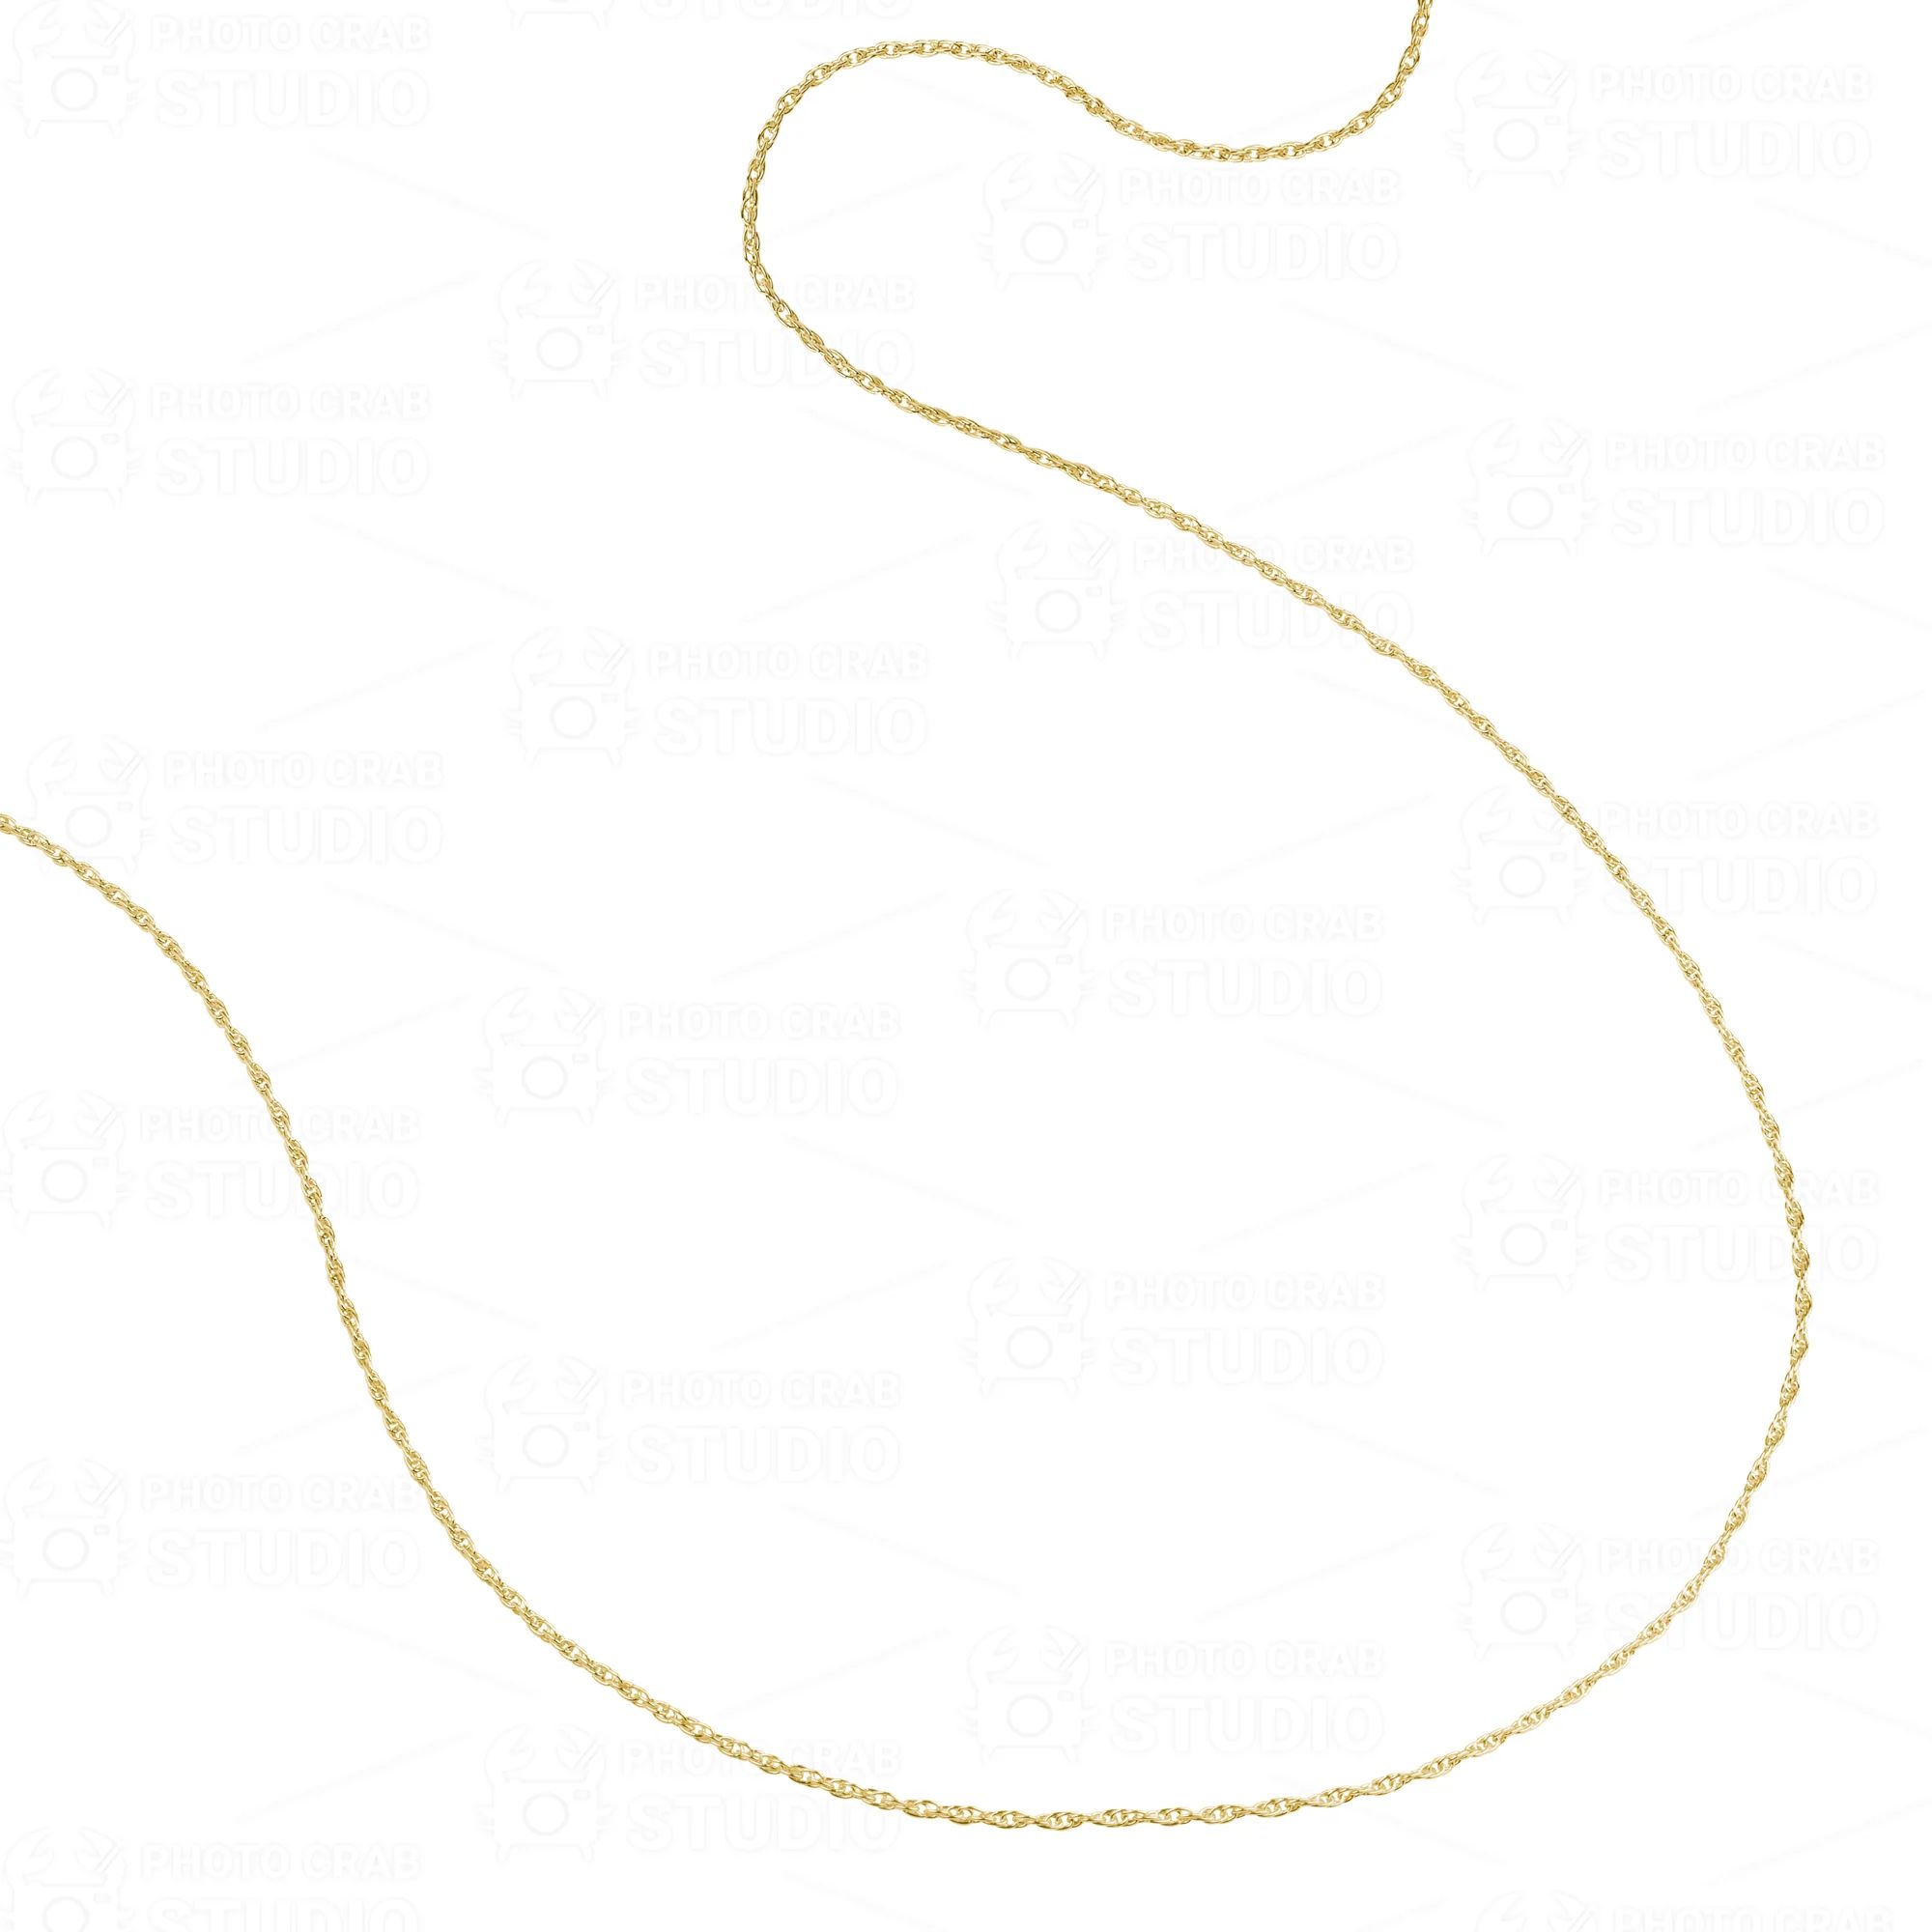 Bardot Belly Chain | Electric Picks Jewelry